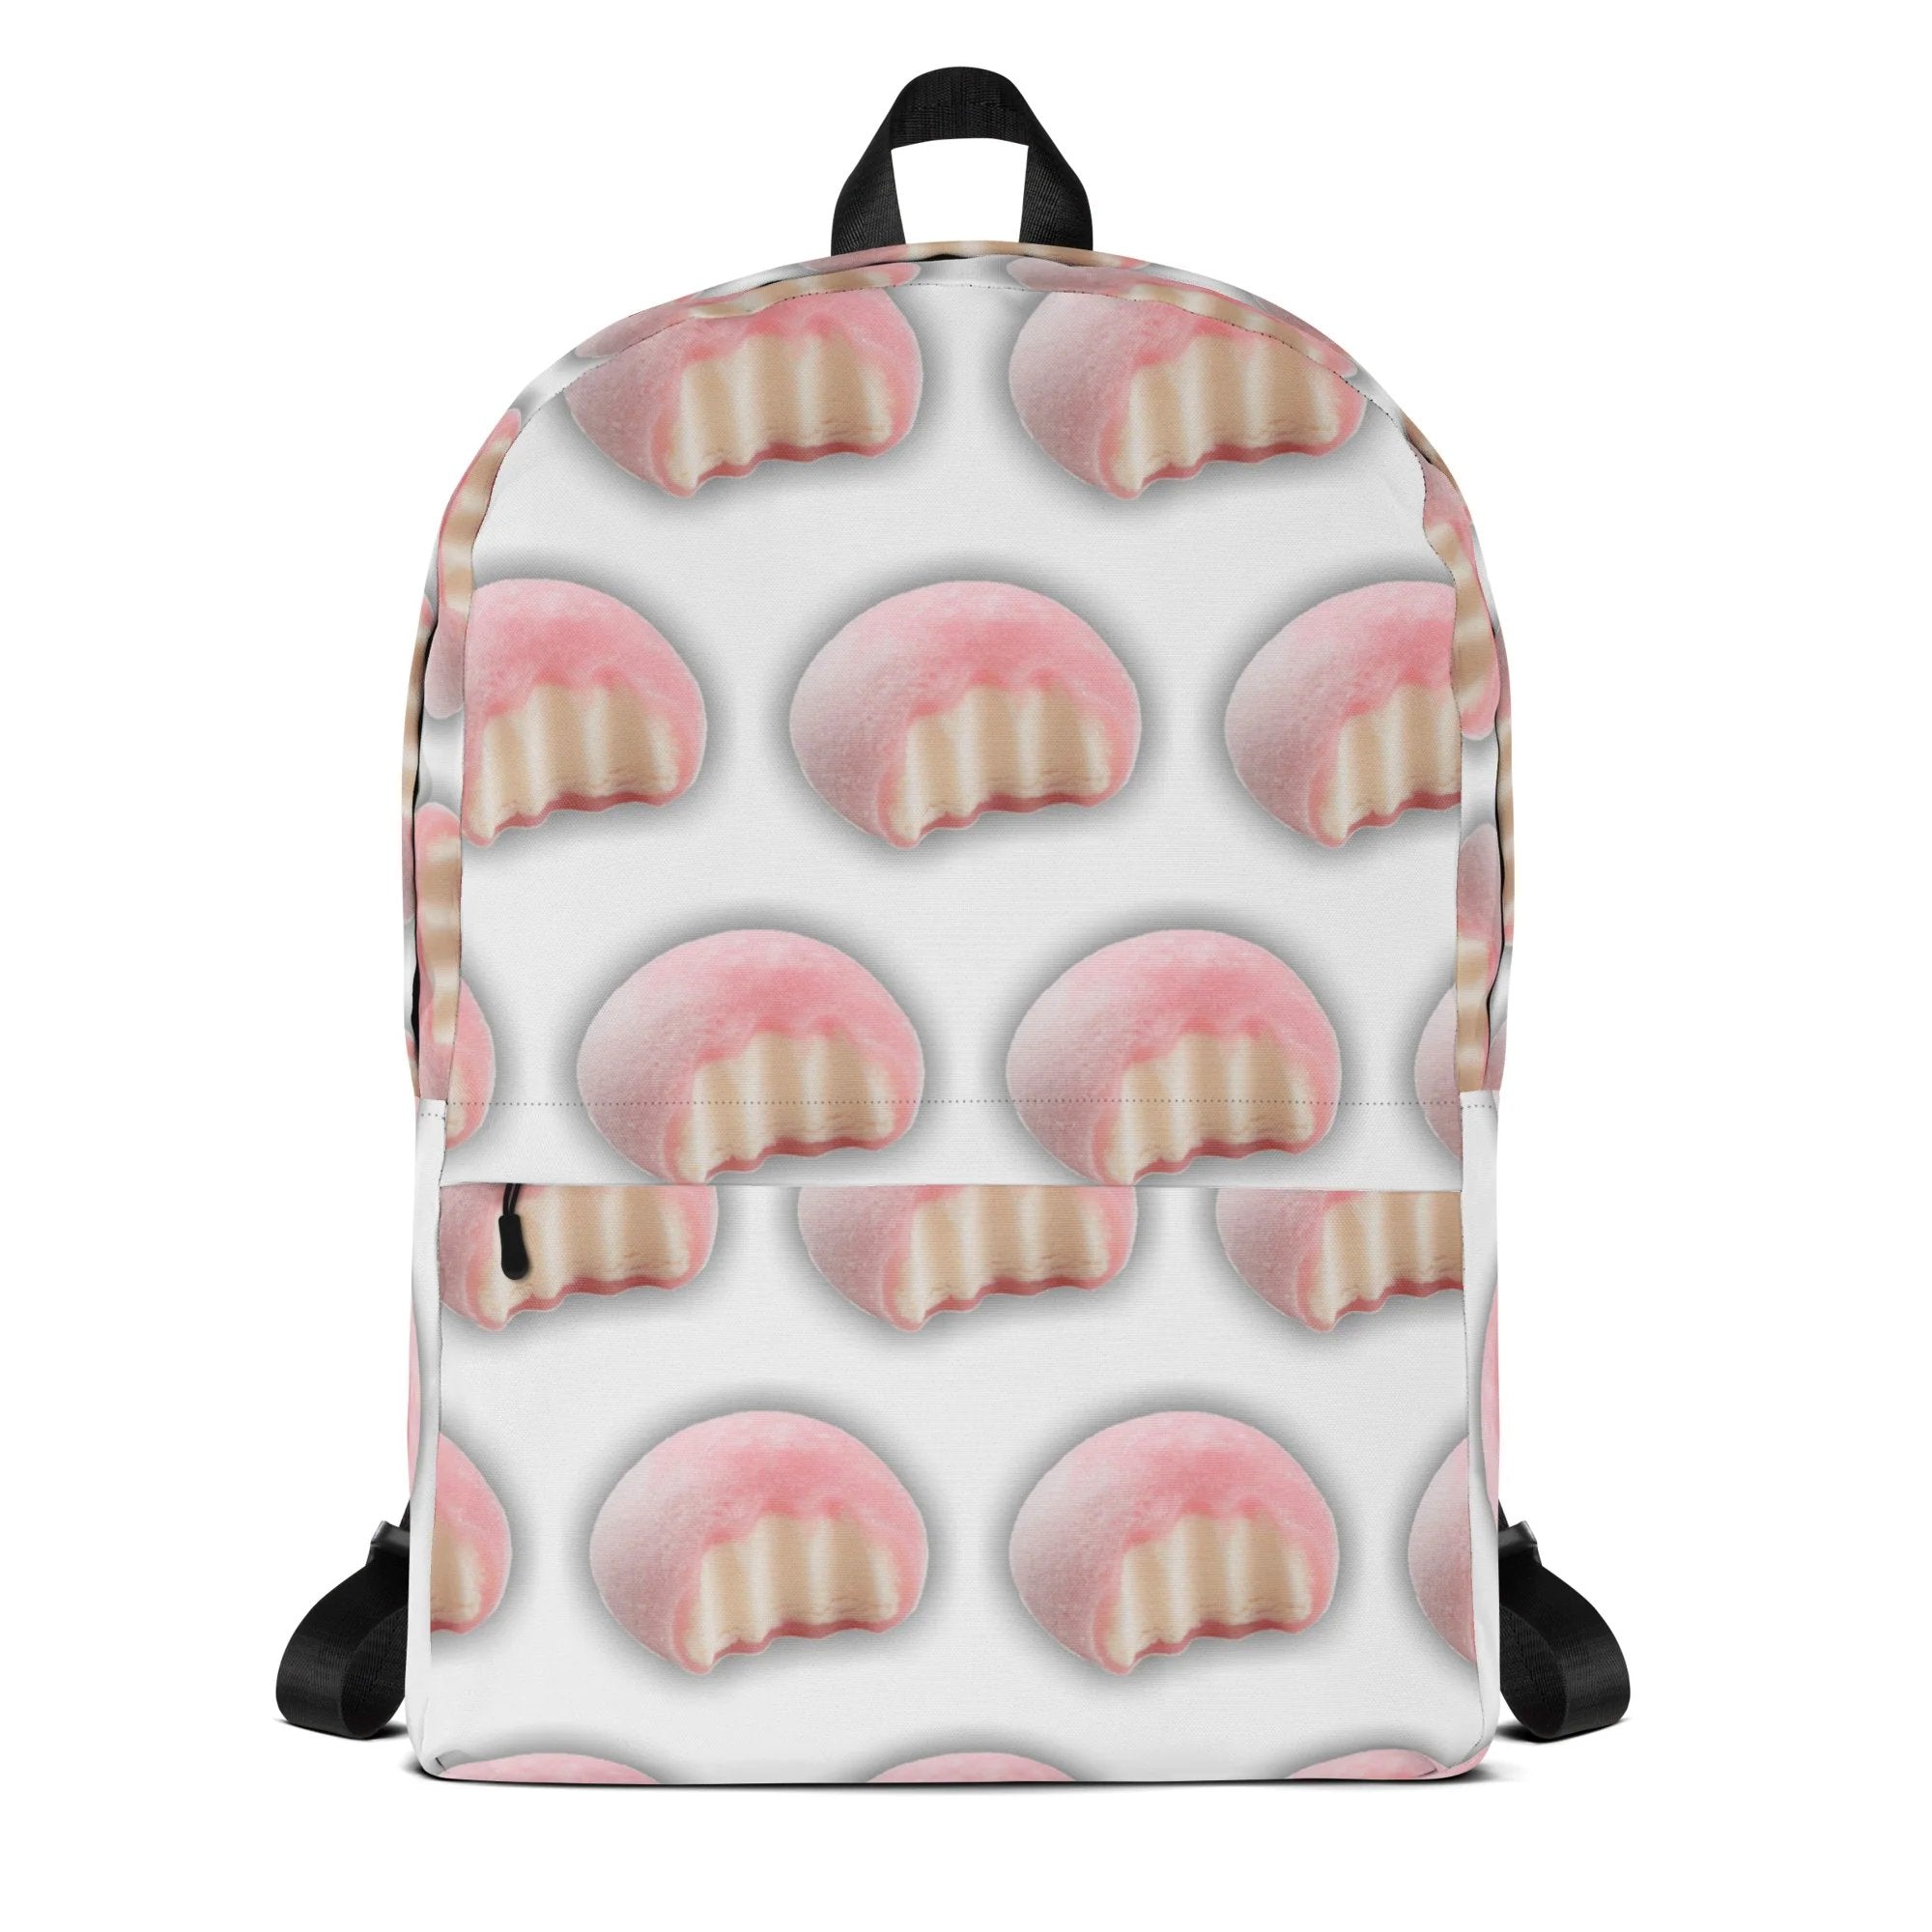 Mochiii® Backpack